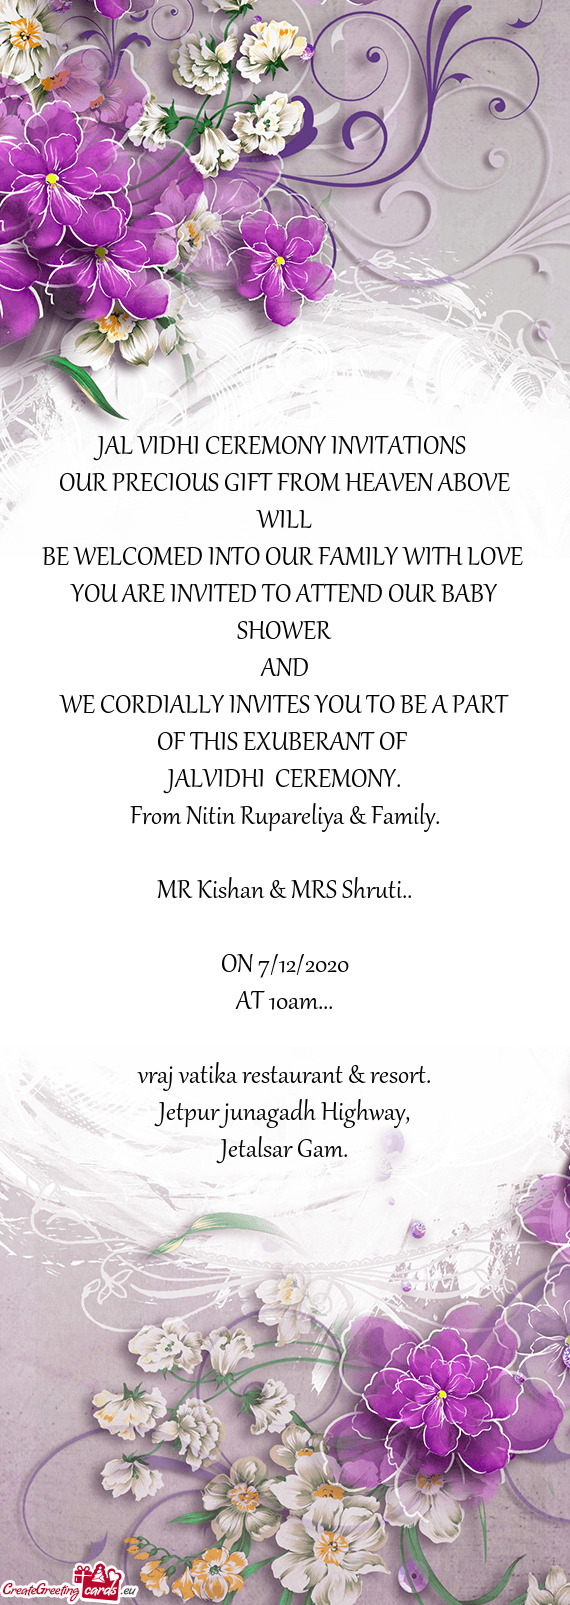 JAL VIDHI CEREMONY INVITATIONS